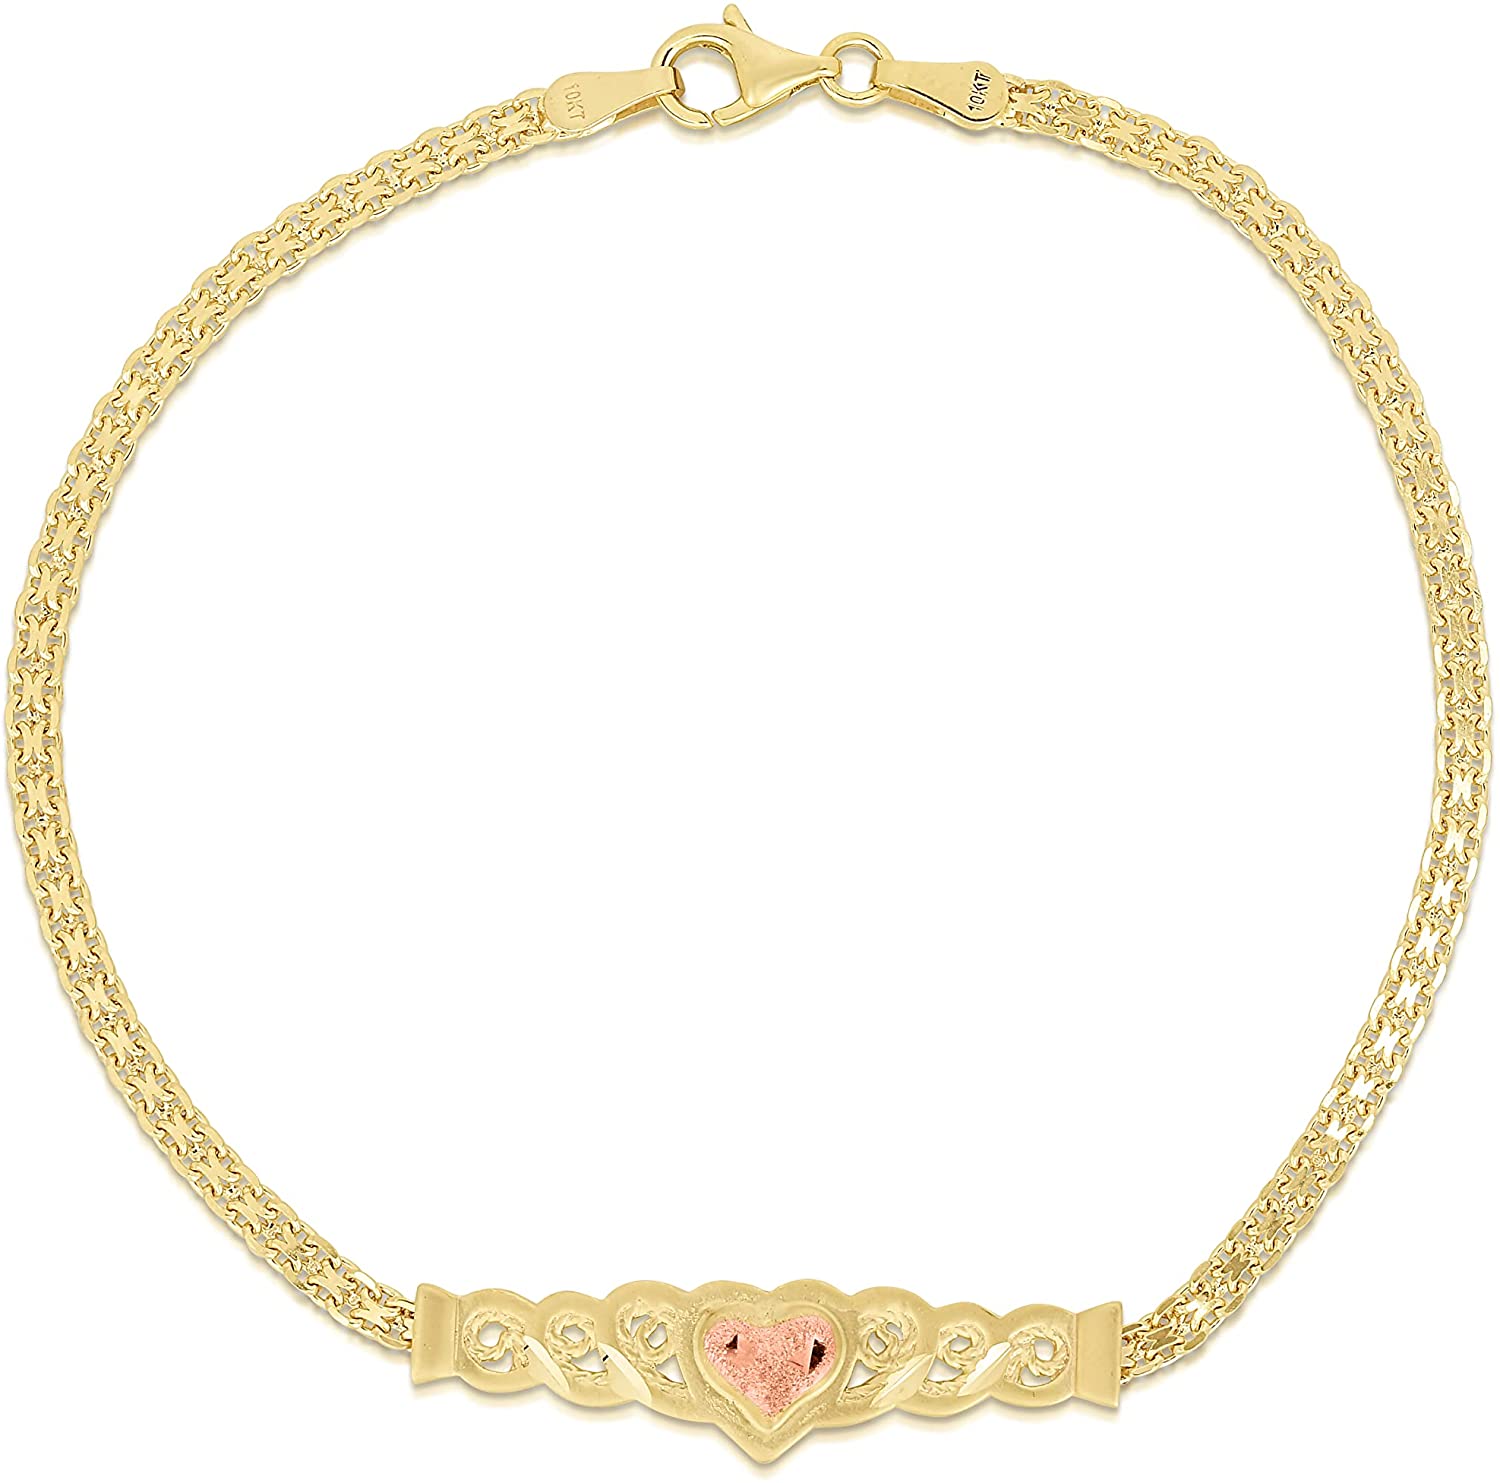 10K Yellow Gold Heart Charm Bracelet